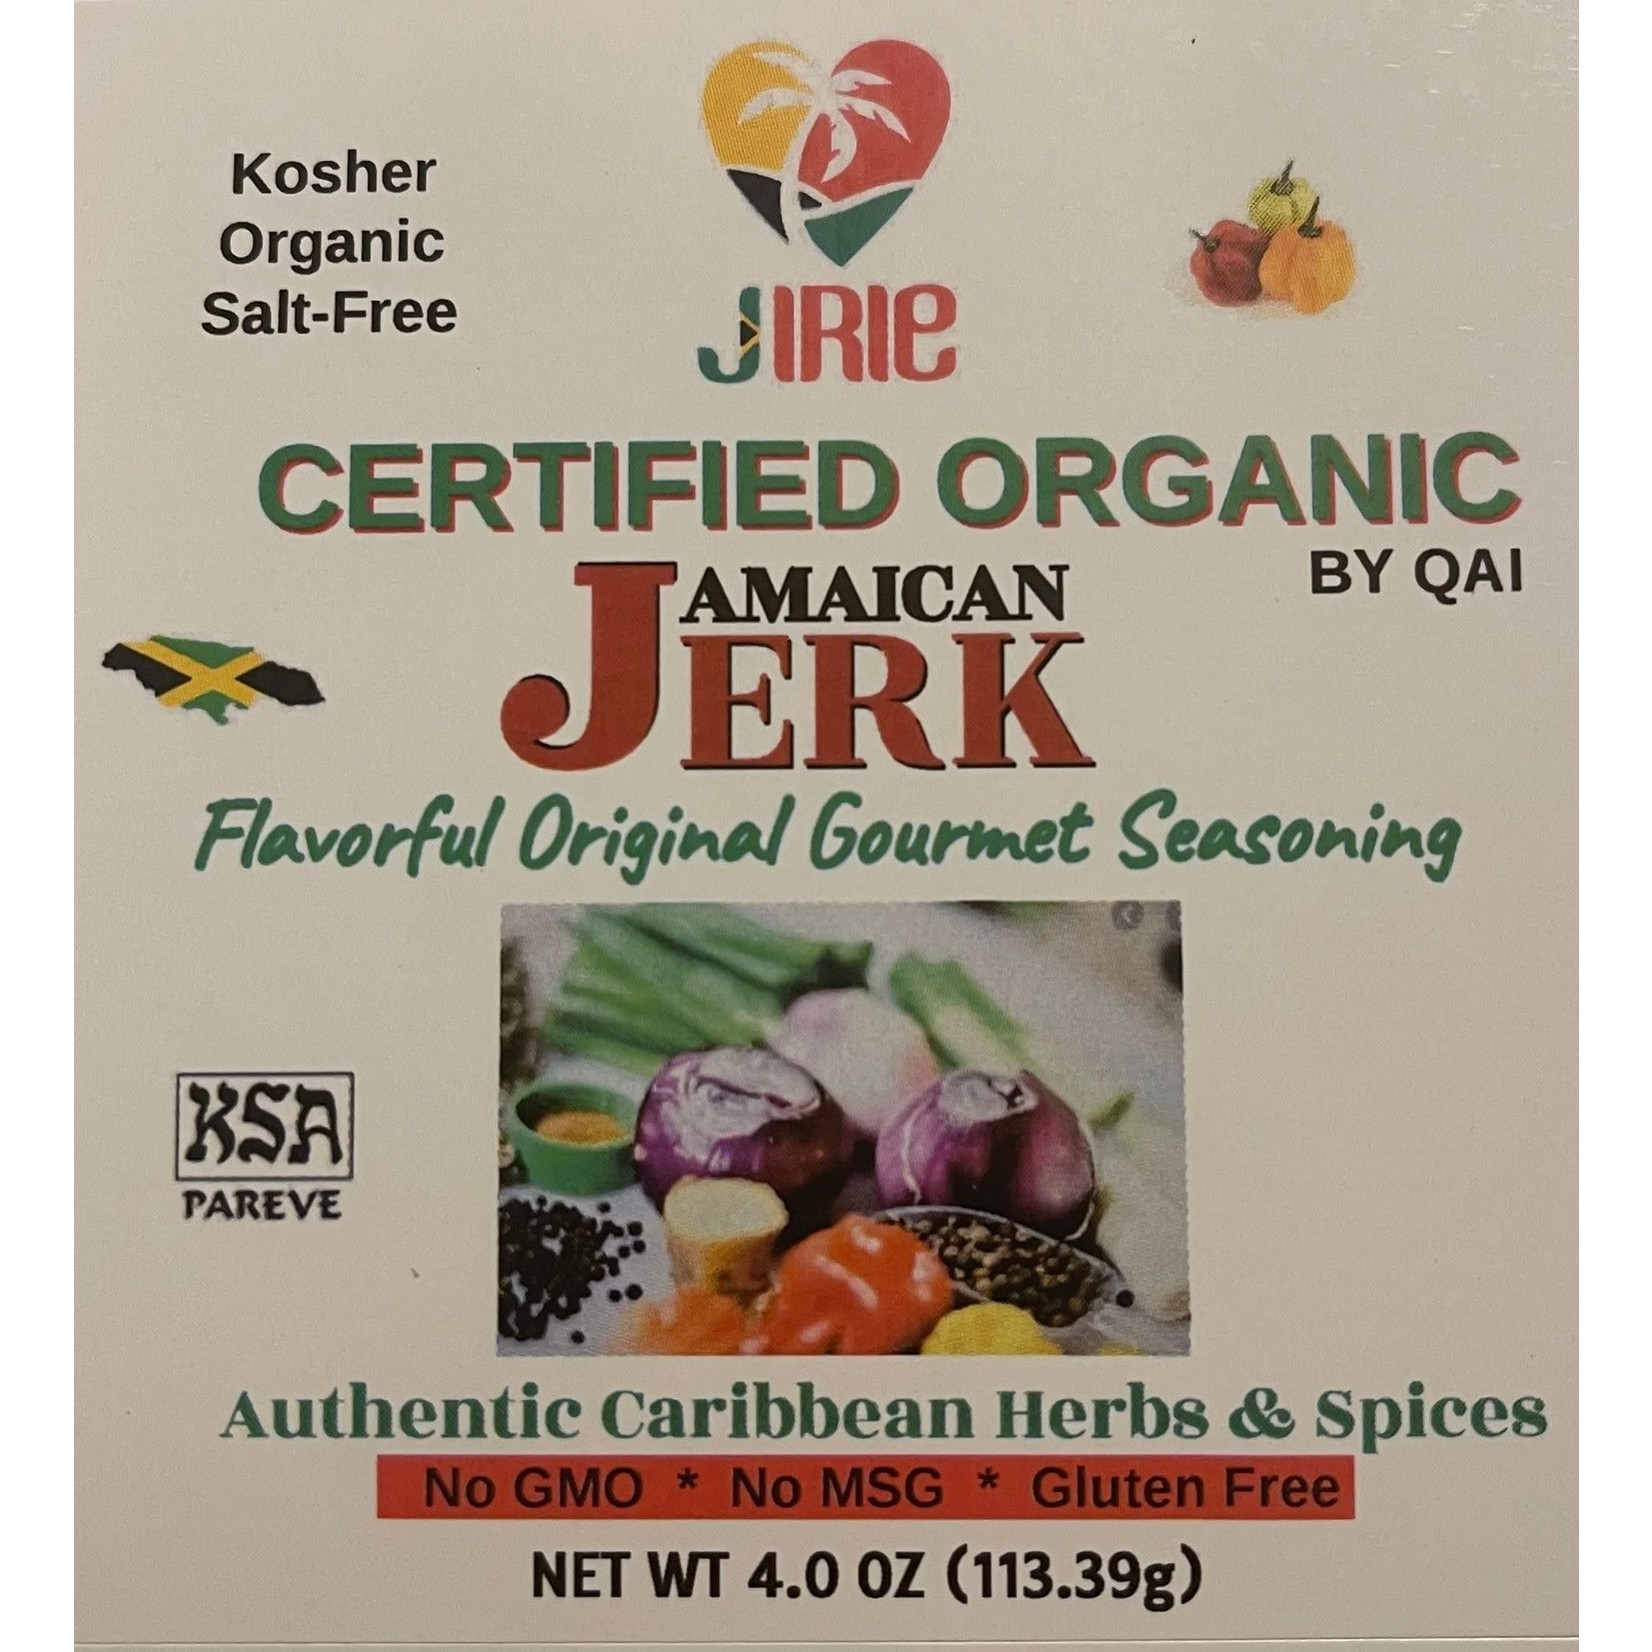 JIRIE Jerk Organic Jamaican Seasoning (Kosher Organic Salt-Free) Medium/Hot